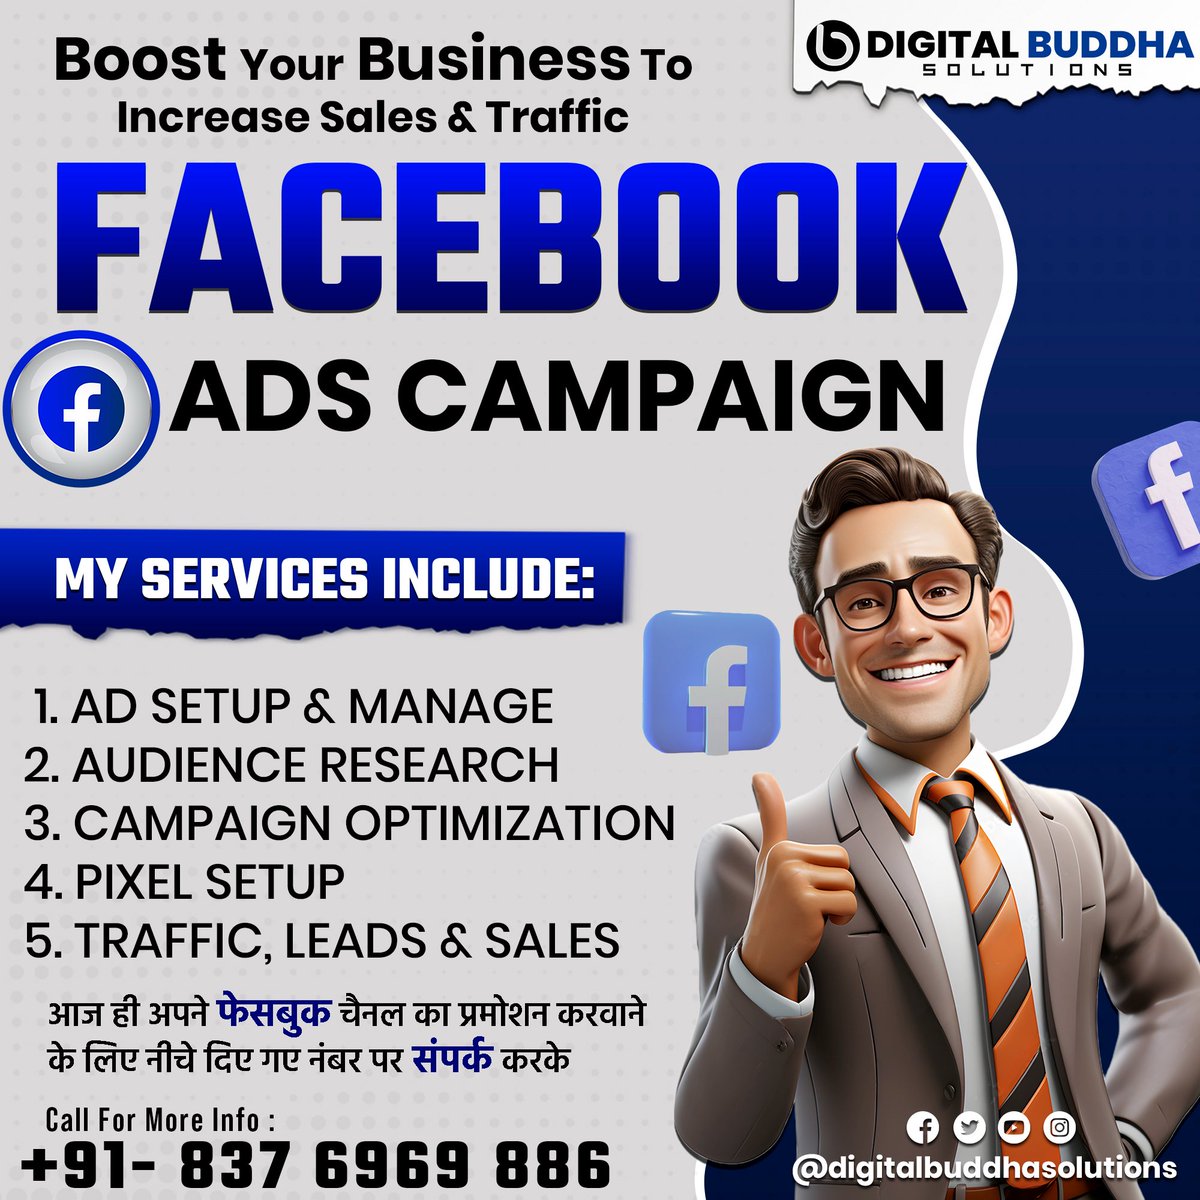 Boost Your Business To Increase Sales & Traffic
𝗙𝗔𝗖𝗘𝗕𝗢𝗢𝗞 𝗔𝗗𝗦 𝗖𝗔𝗠𝗣𝗔𝗜𝗡𝗚
.
.
.
#digitalbuddhasolutions #digitalbuddhasolution #digitalbuddha #facebookpromotion #facebookmarketing #expart #FacebookPage #facebookads #facebookadstrategy #adssetup #facebookmanagement